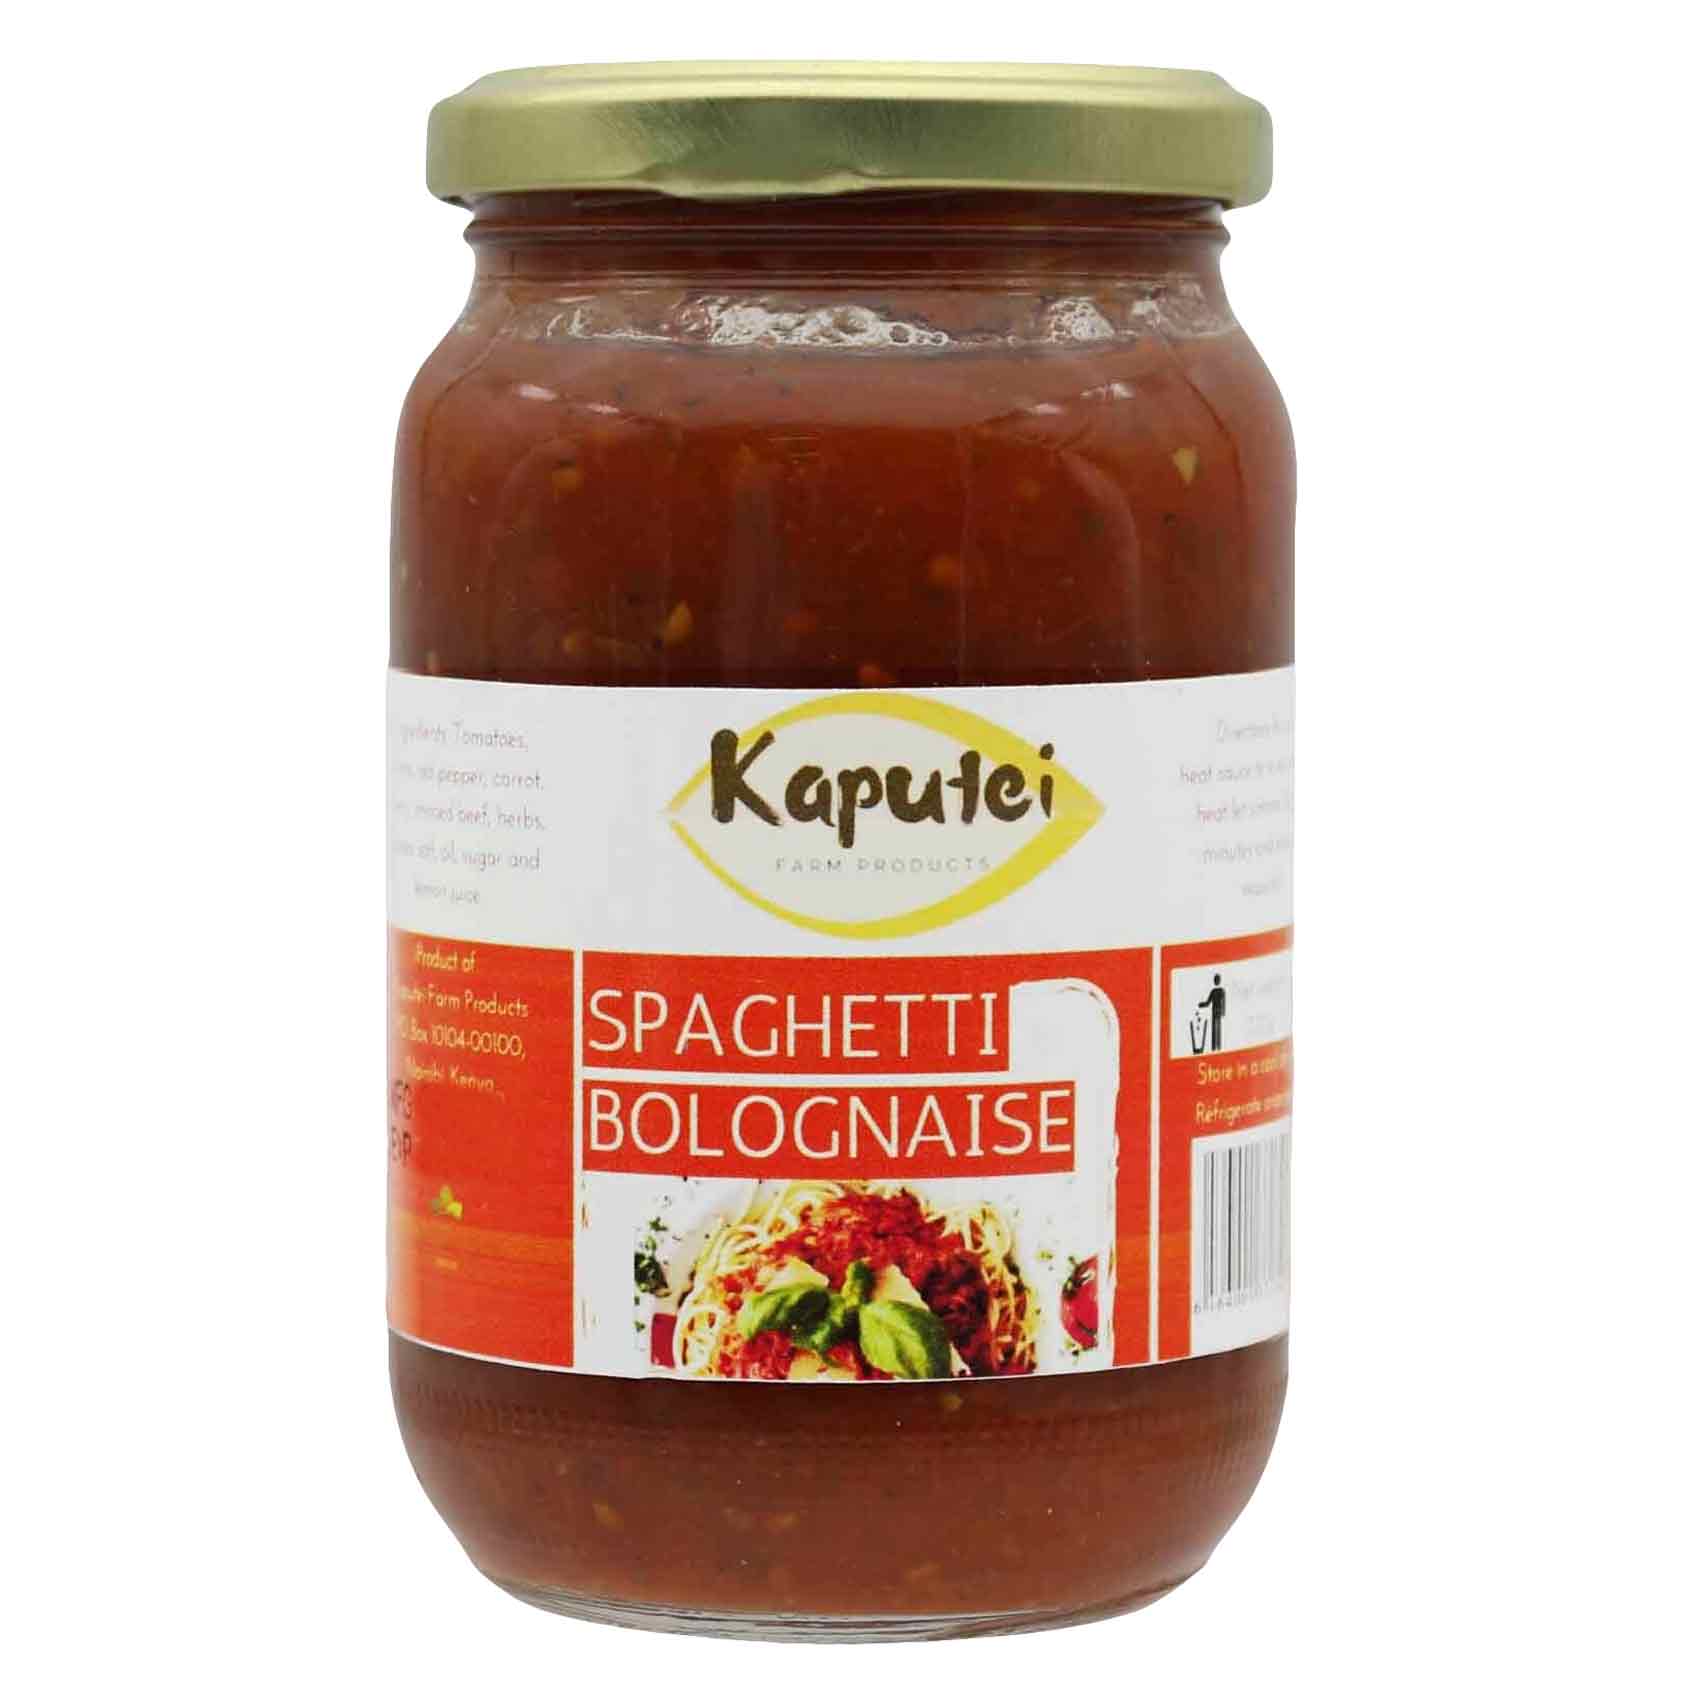 Kaputei Spaghetti Bolognaise Sauce 330g